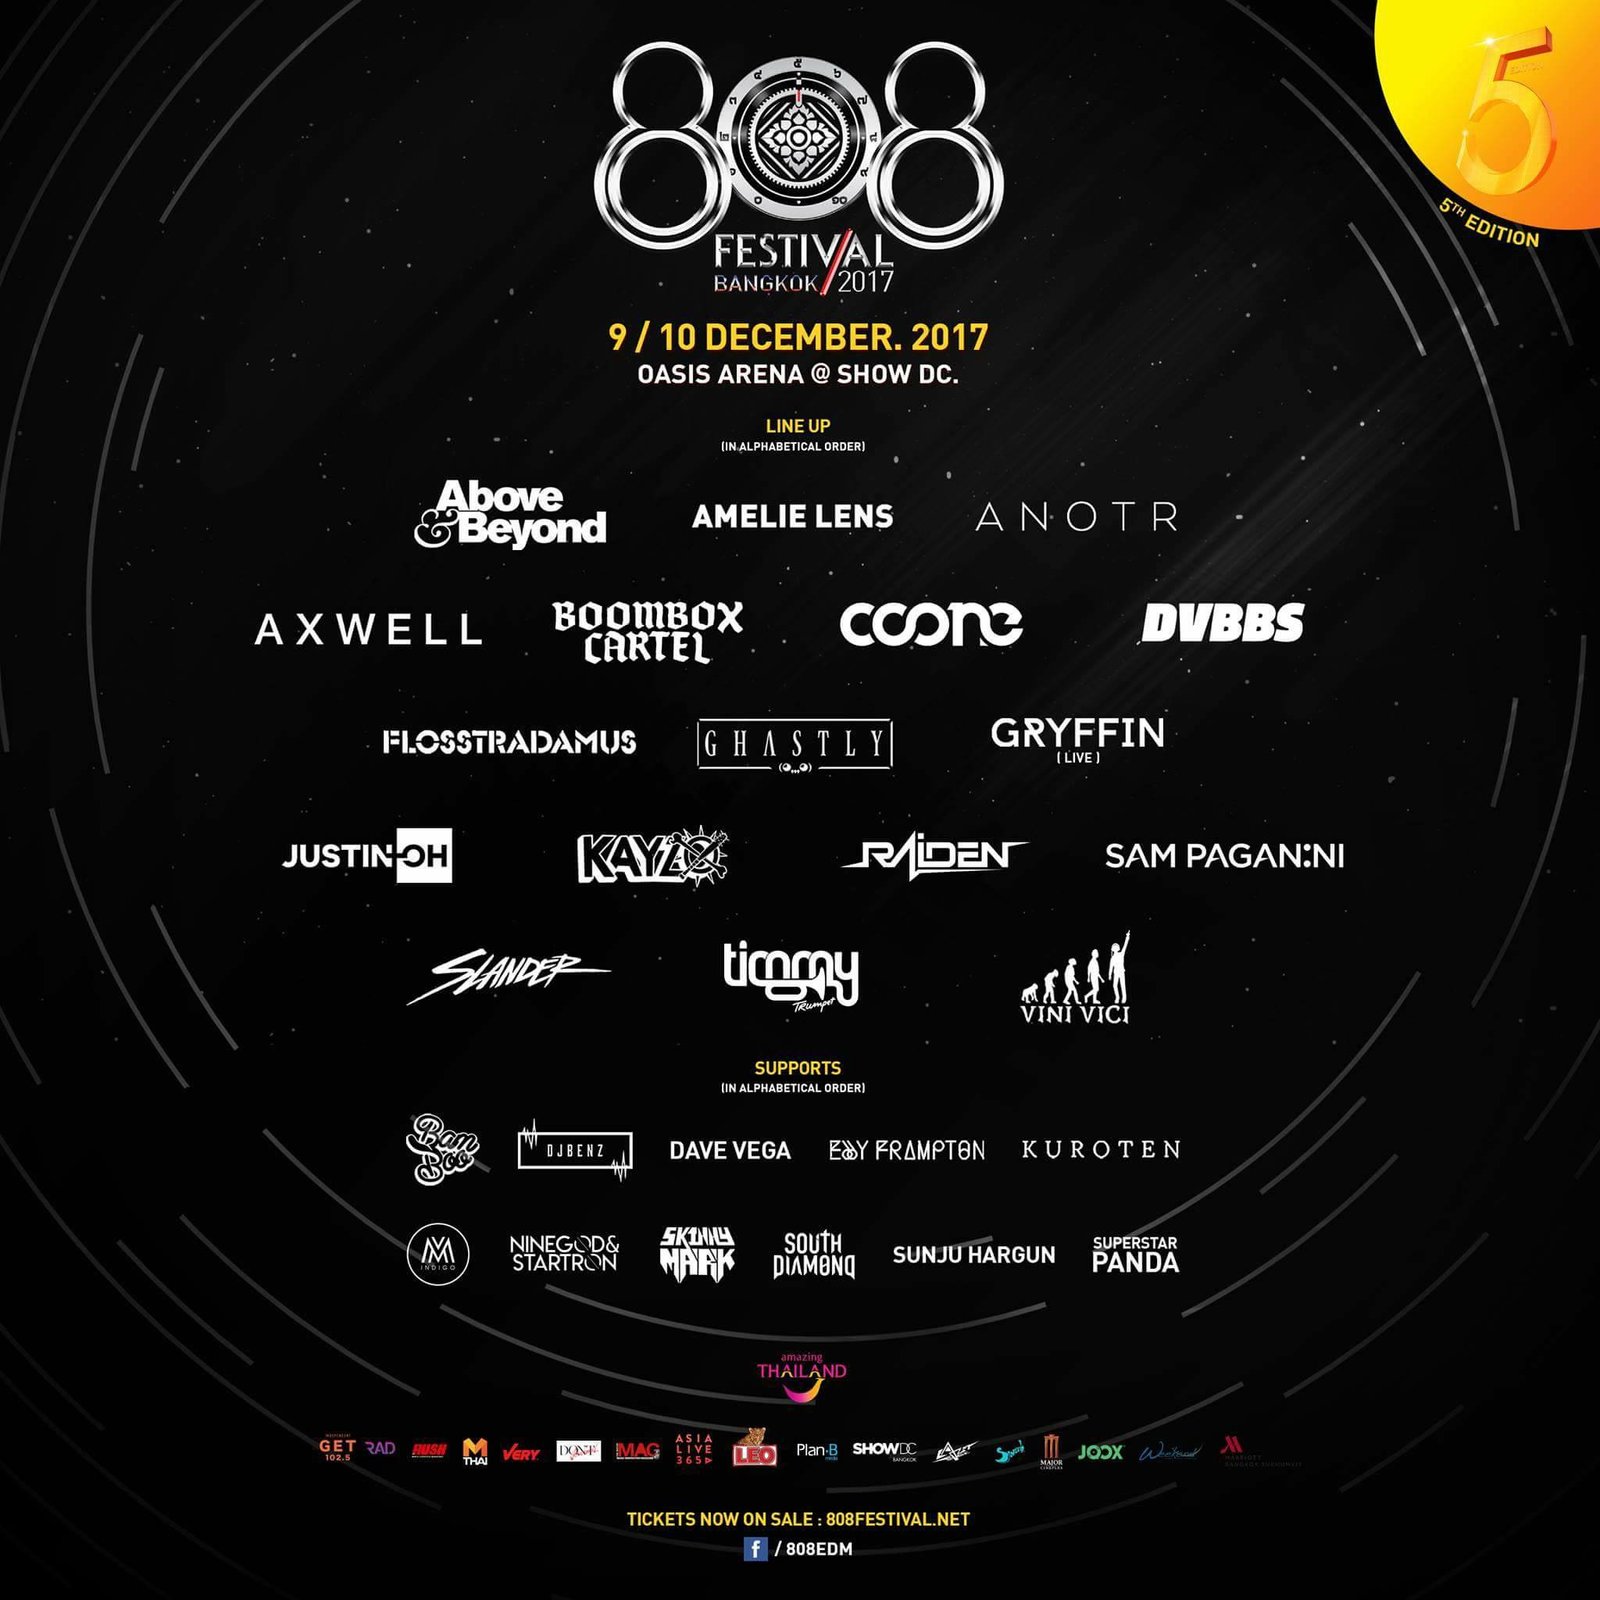 808 Festival 2017 final lineup